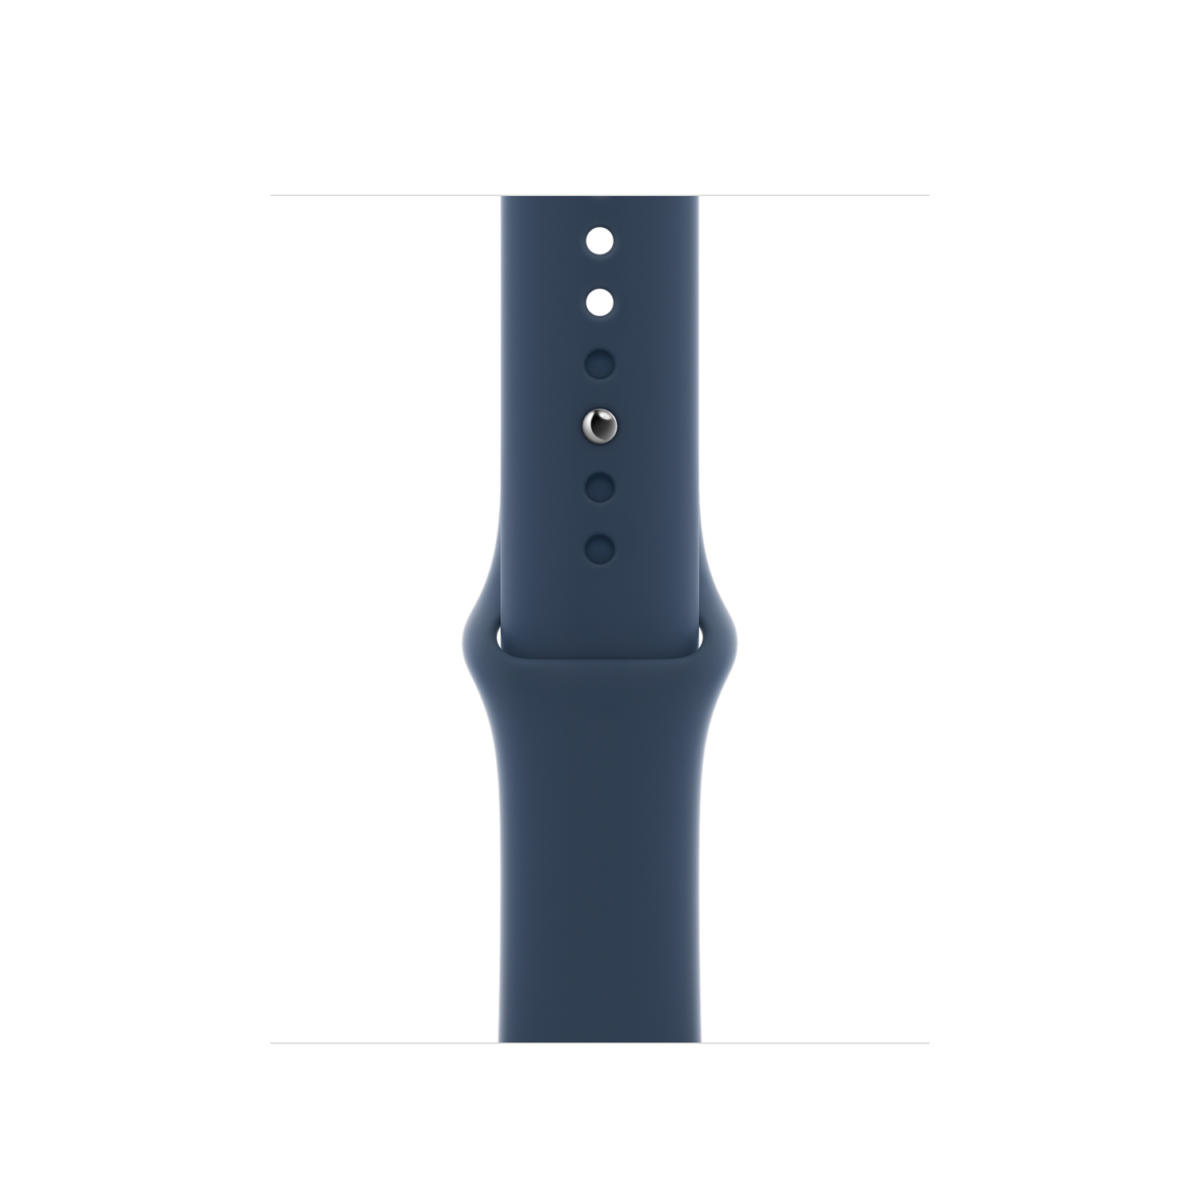 MKNY3LL/A - $223 - Apple Watch SE (GPS, 40mm) - Silver Aluminum 